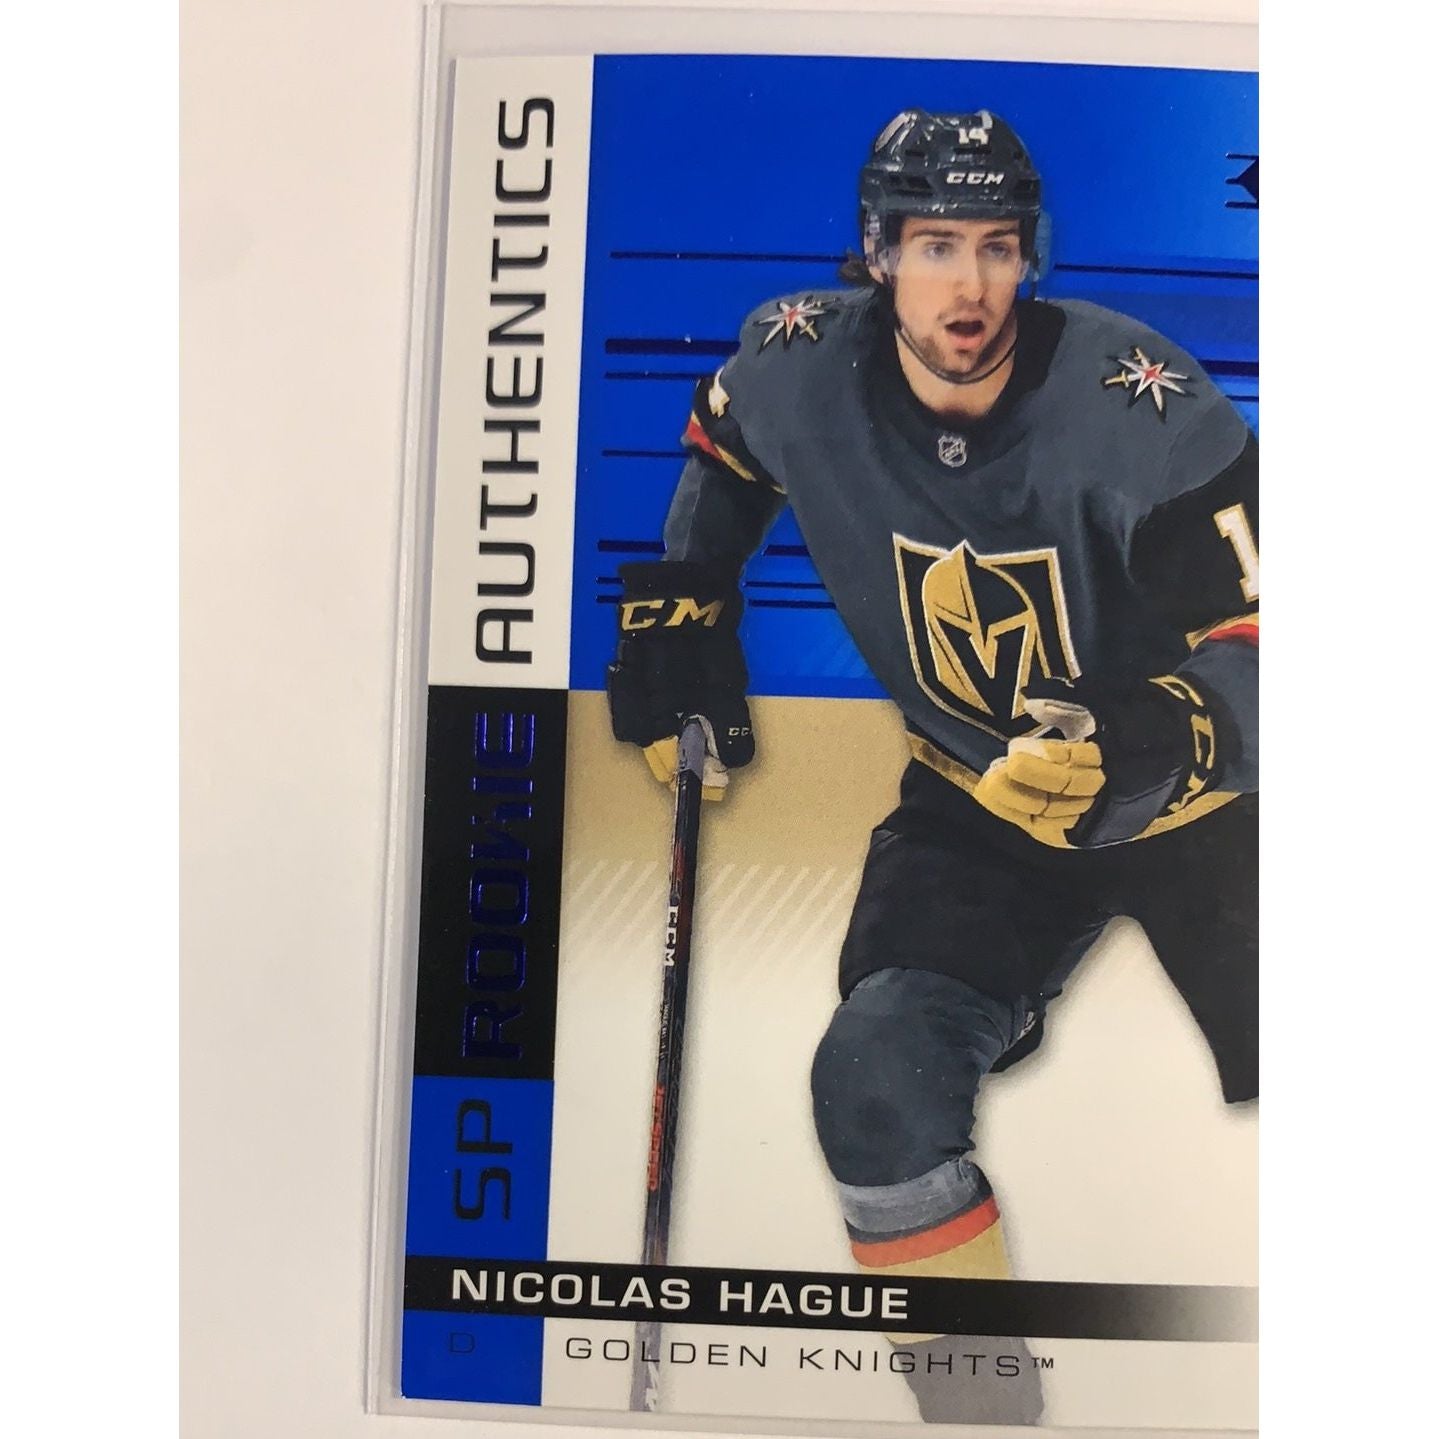  2019-20 SP Nicolas Hague Rookie Authentics  Local Legends Cards & Collectibles